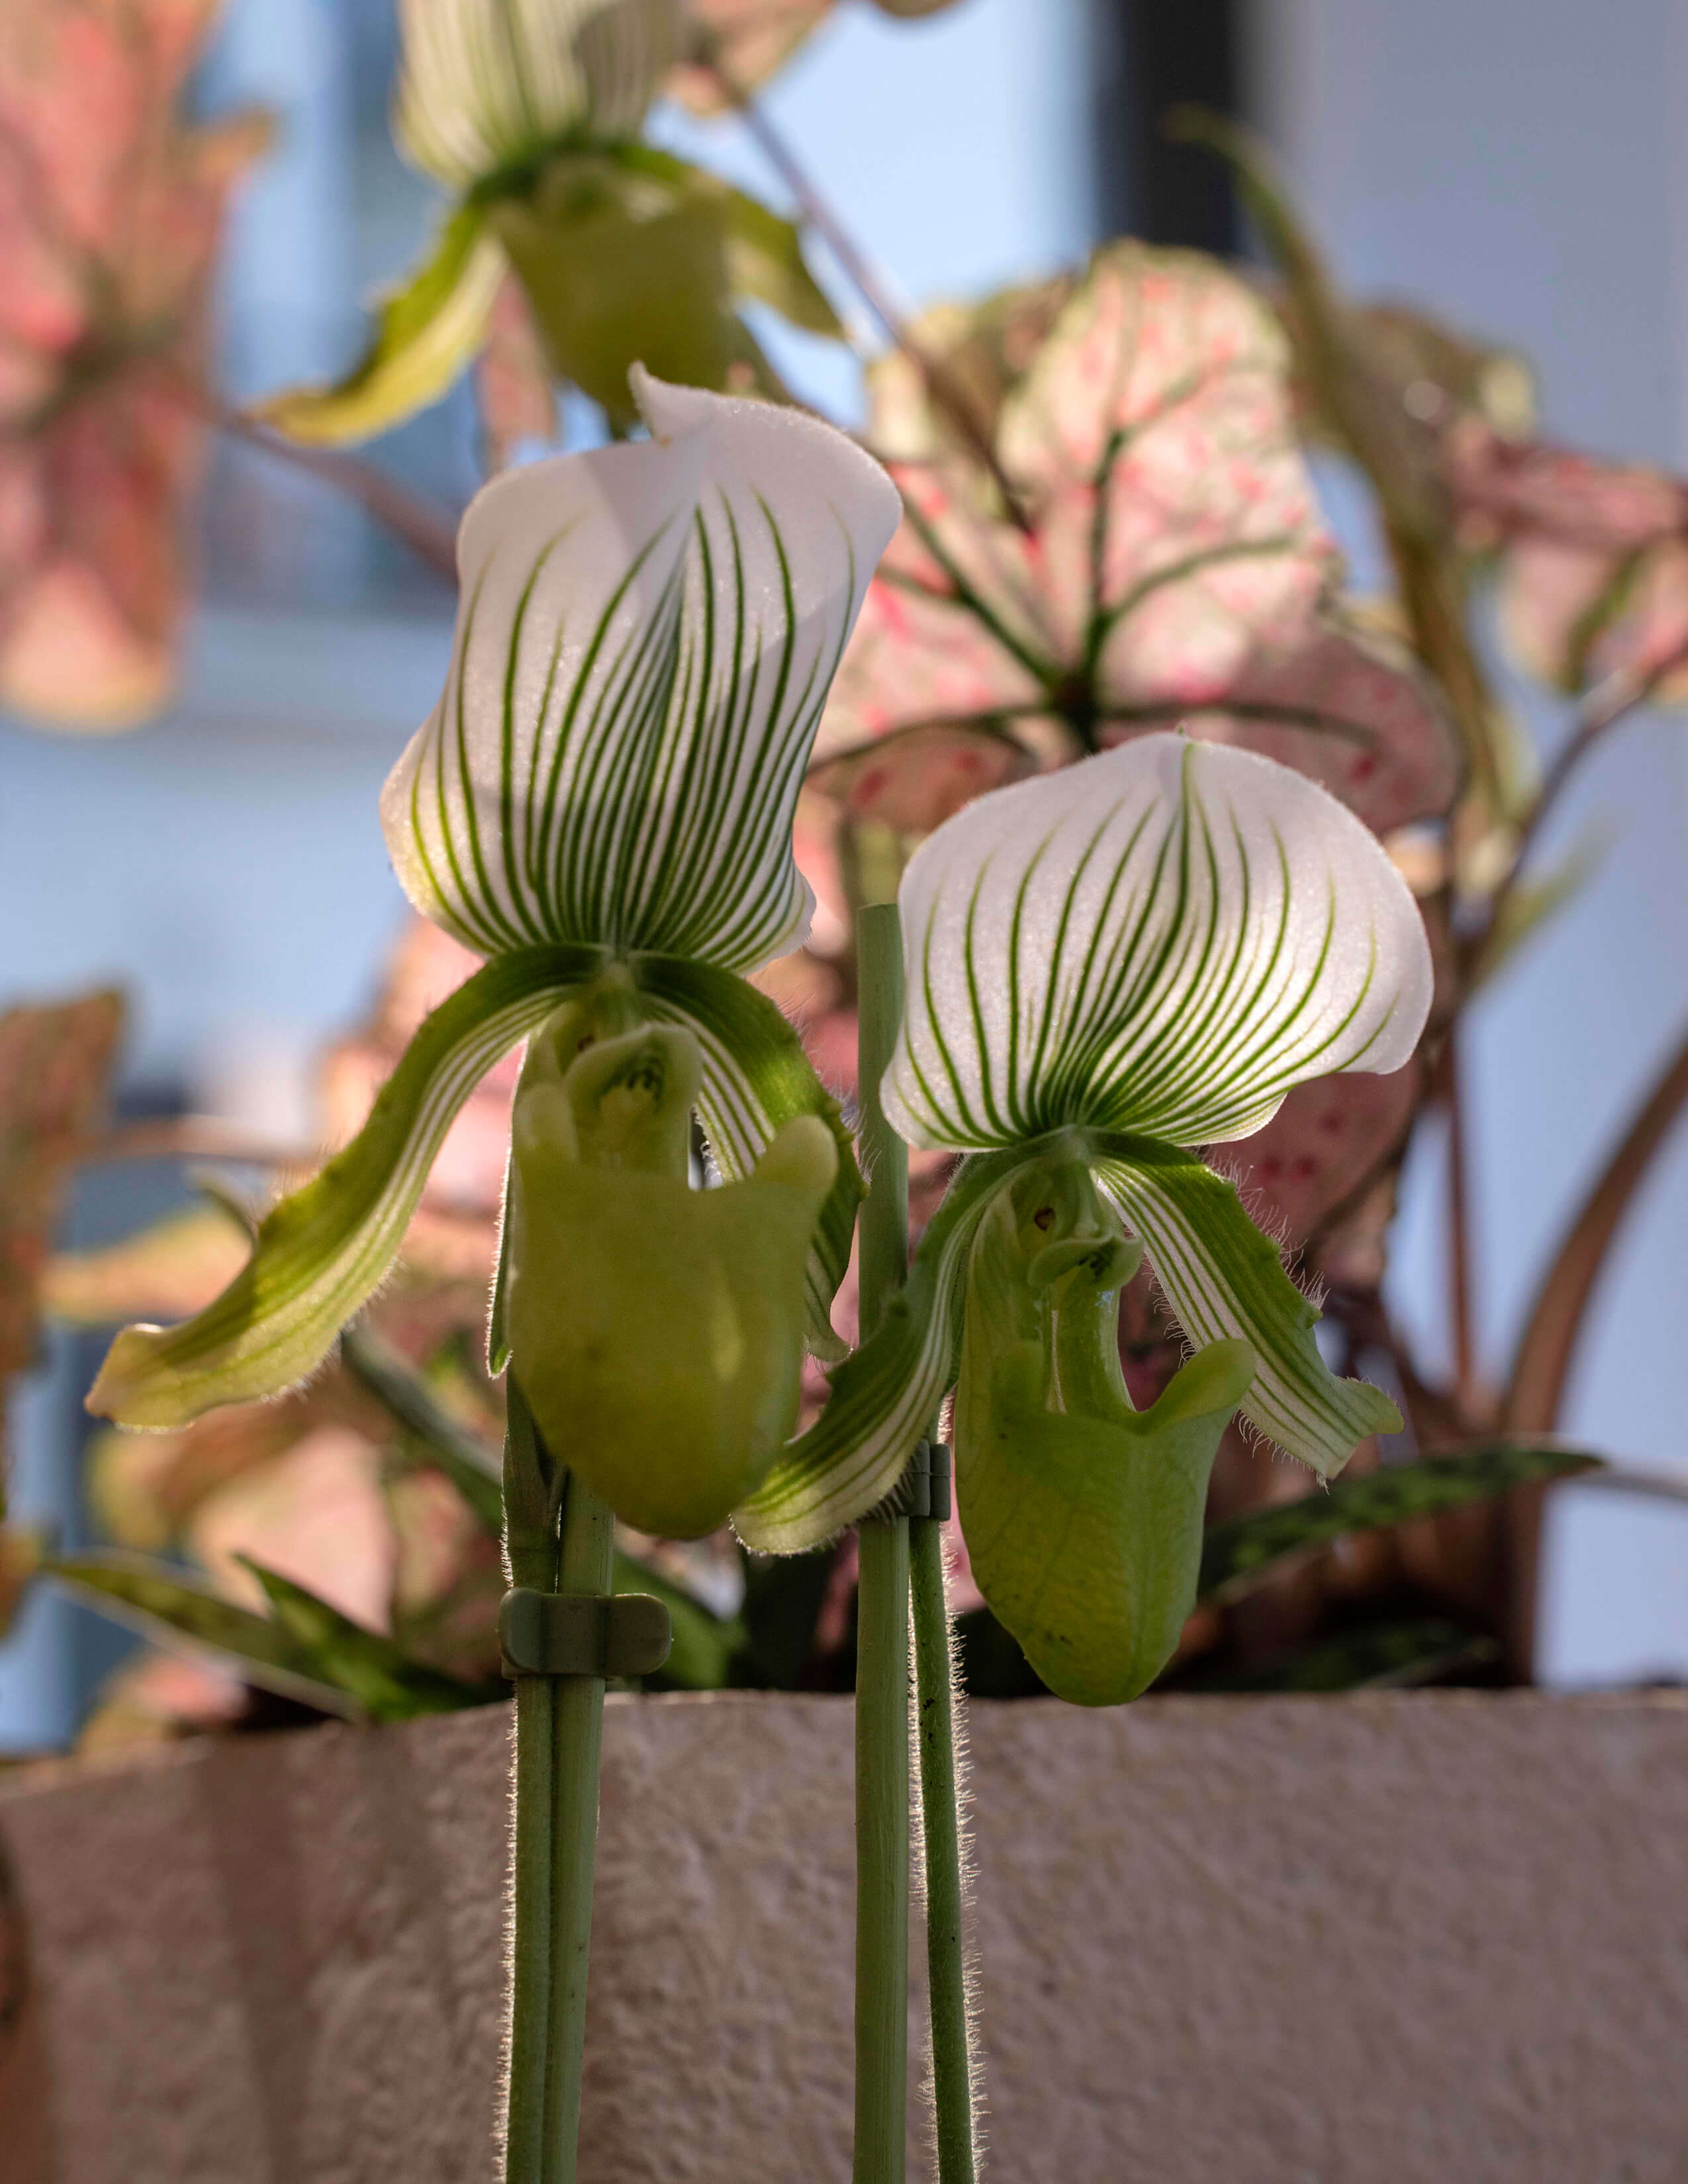 Paphiopedilum maudiae femmas, a rarely seen orchids.